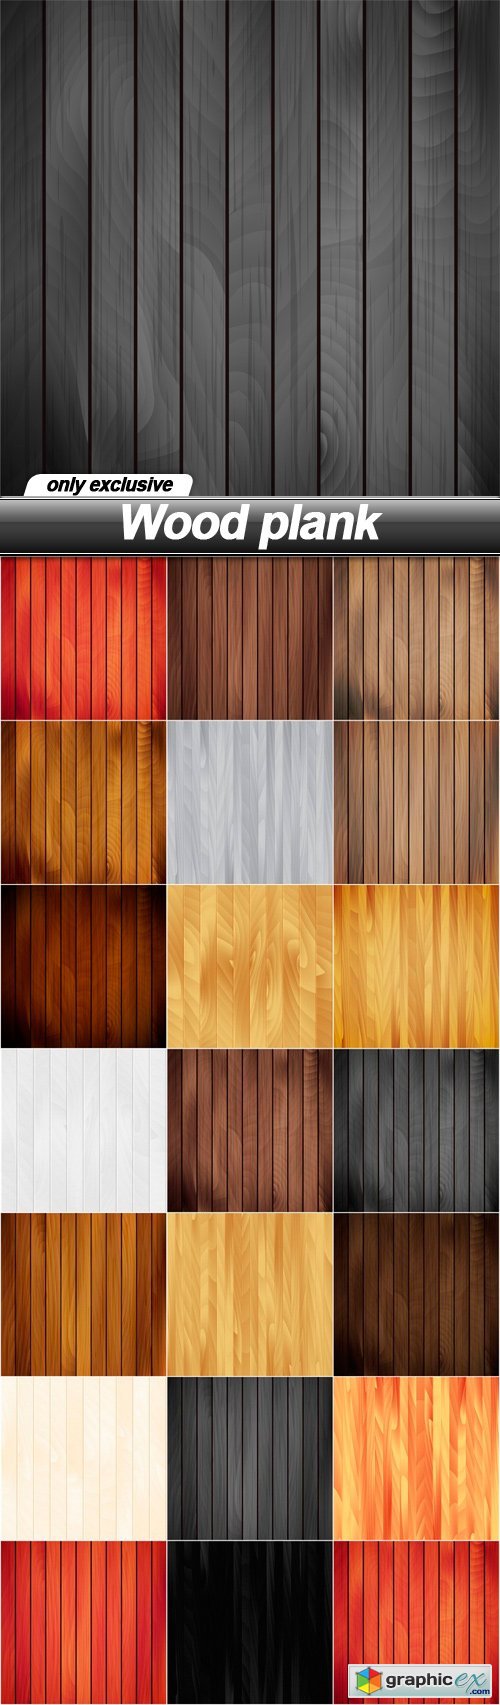 Wood plank - 20 EPS